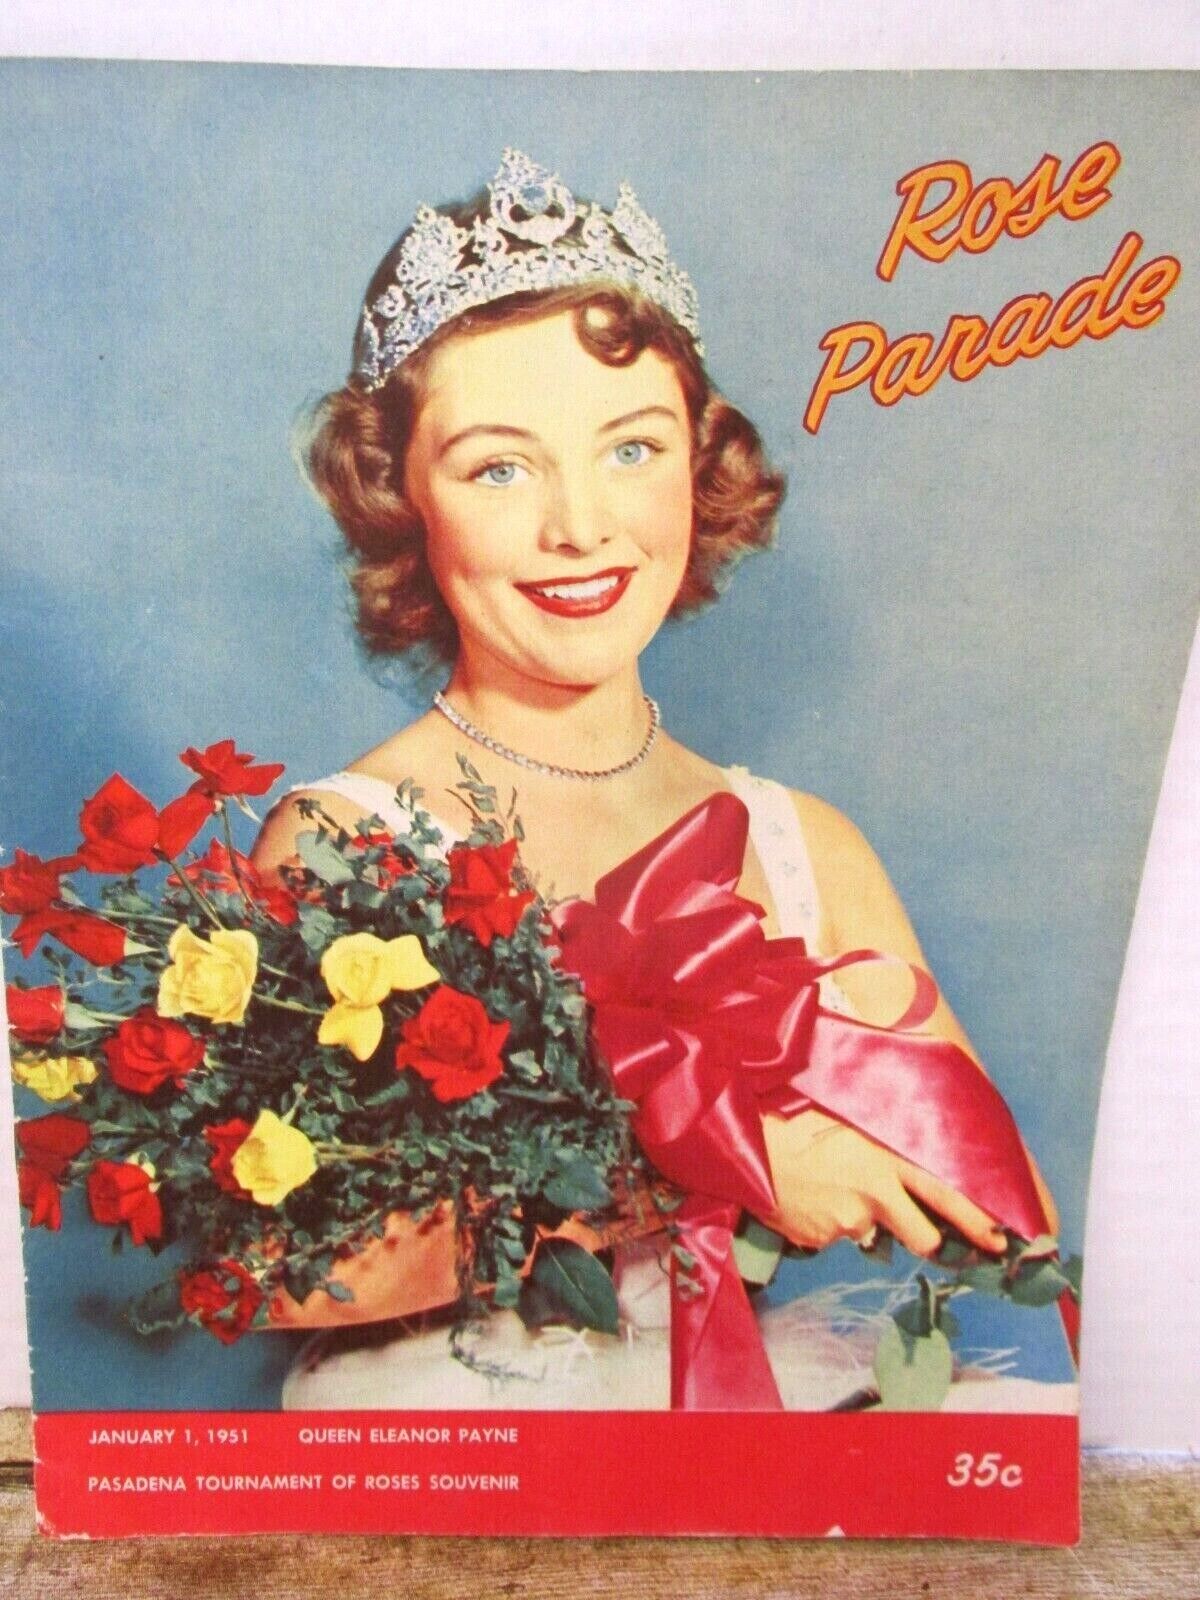 Rose Parade Souvenir Booklet 1951 Pasadena Tournament of Roses Vol 2 Number 2